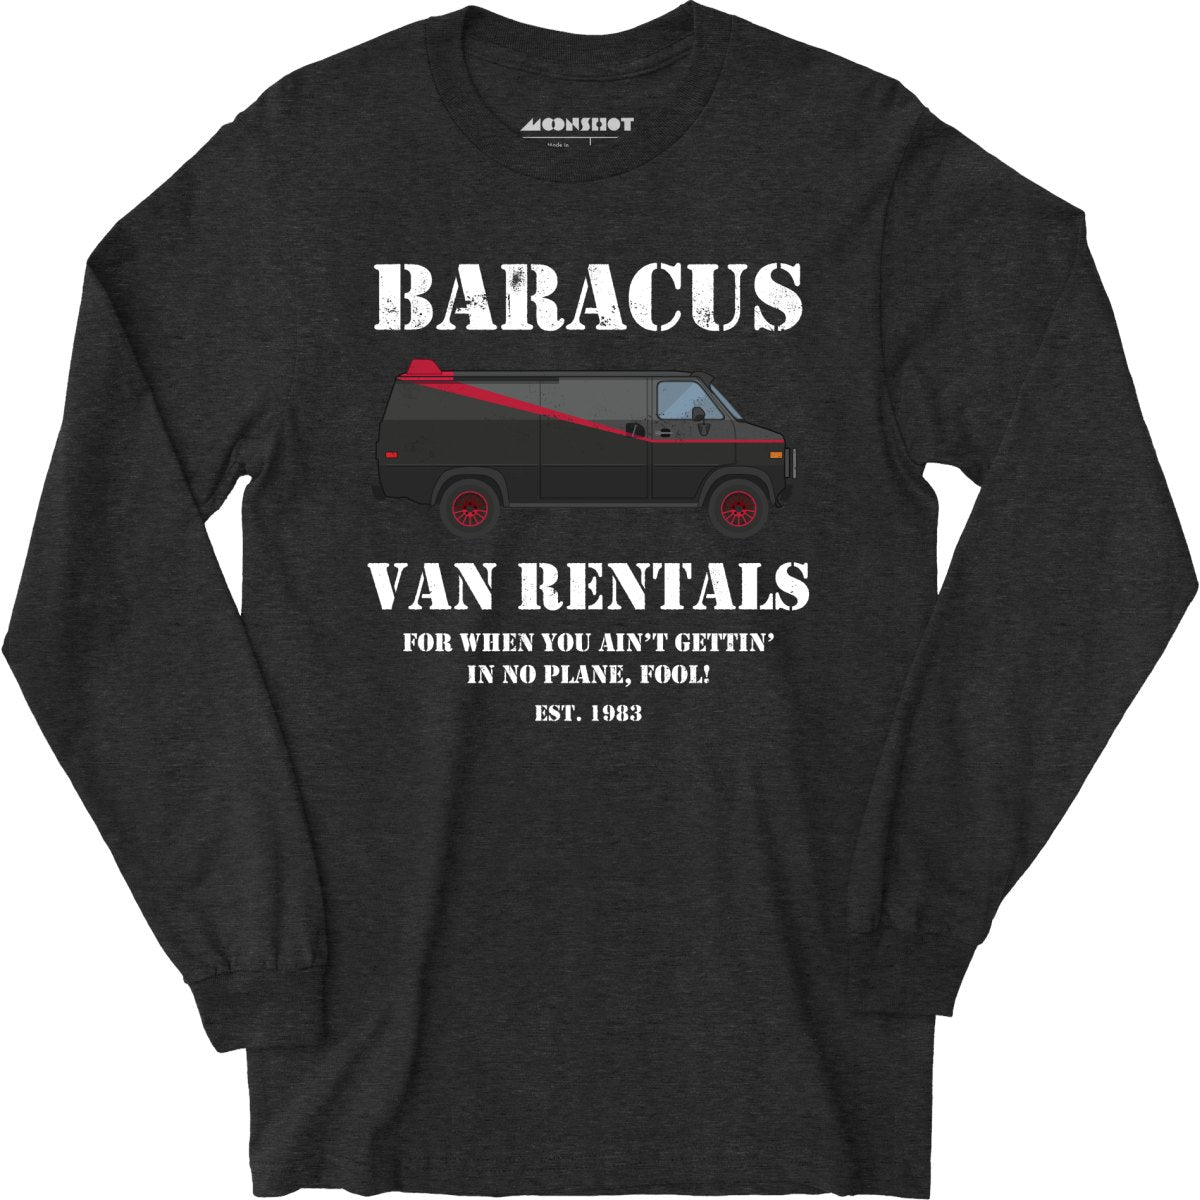 Baracus Van Rentals - Long Sleeve T-Shirt